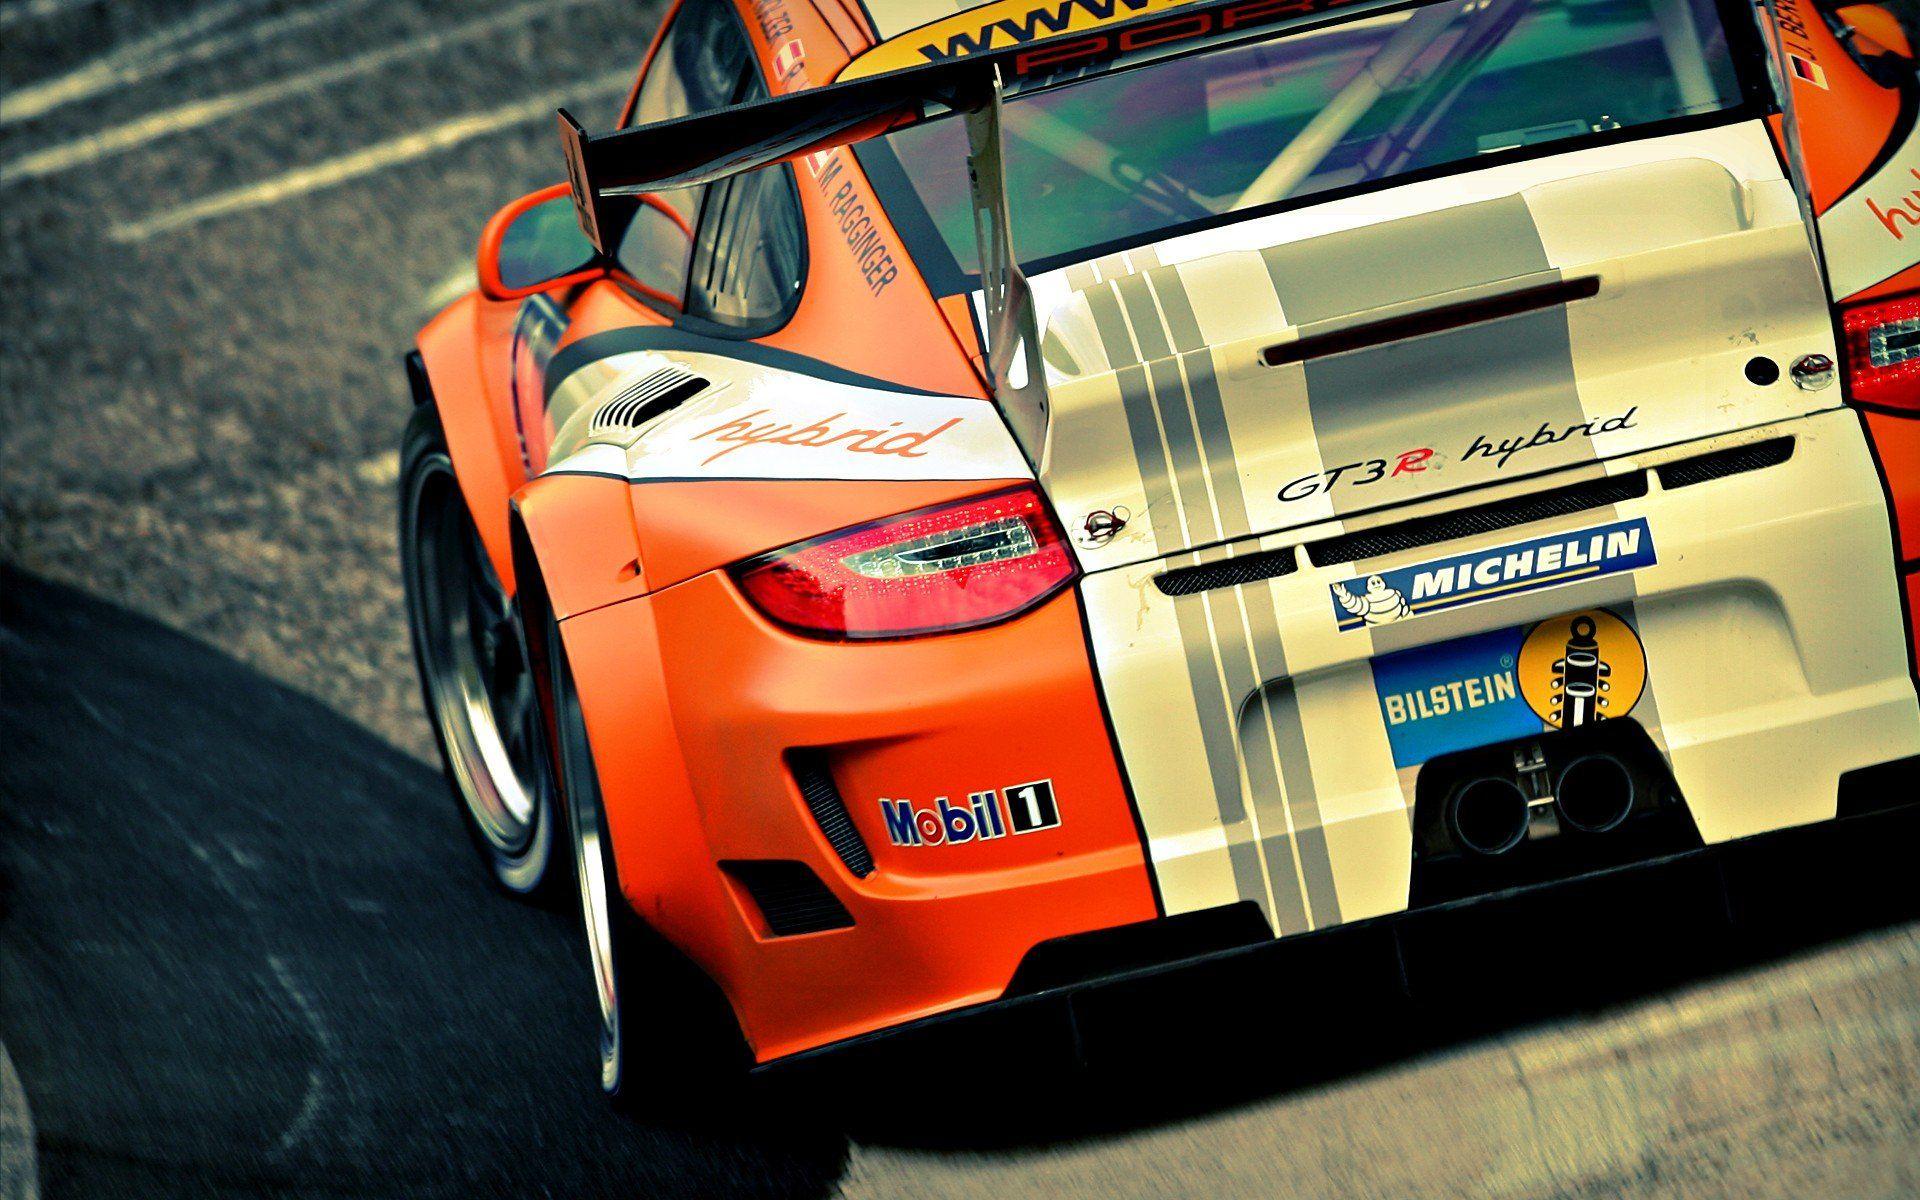 Porsche orange Hybrid vehicles Porsche GT3 Cup Michelin racing cars